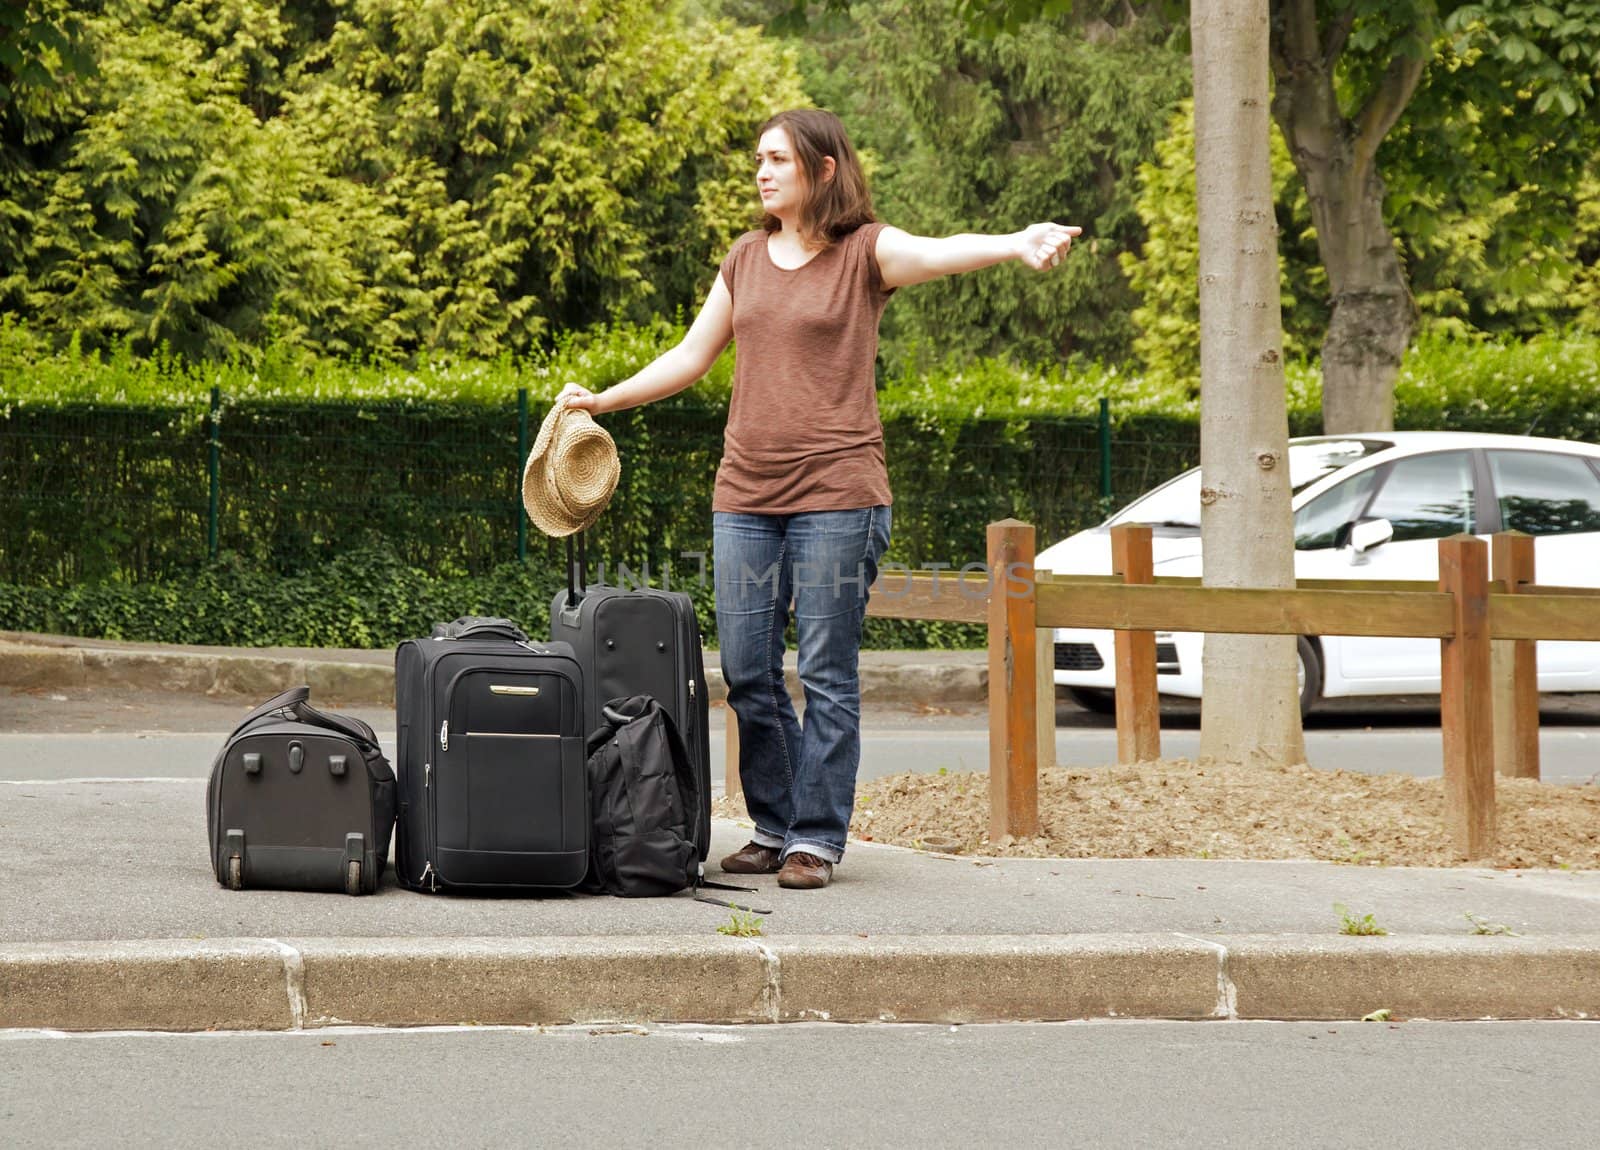 woman doing the hitchhiking by neko92vl